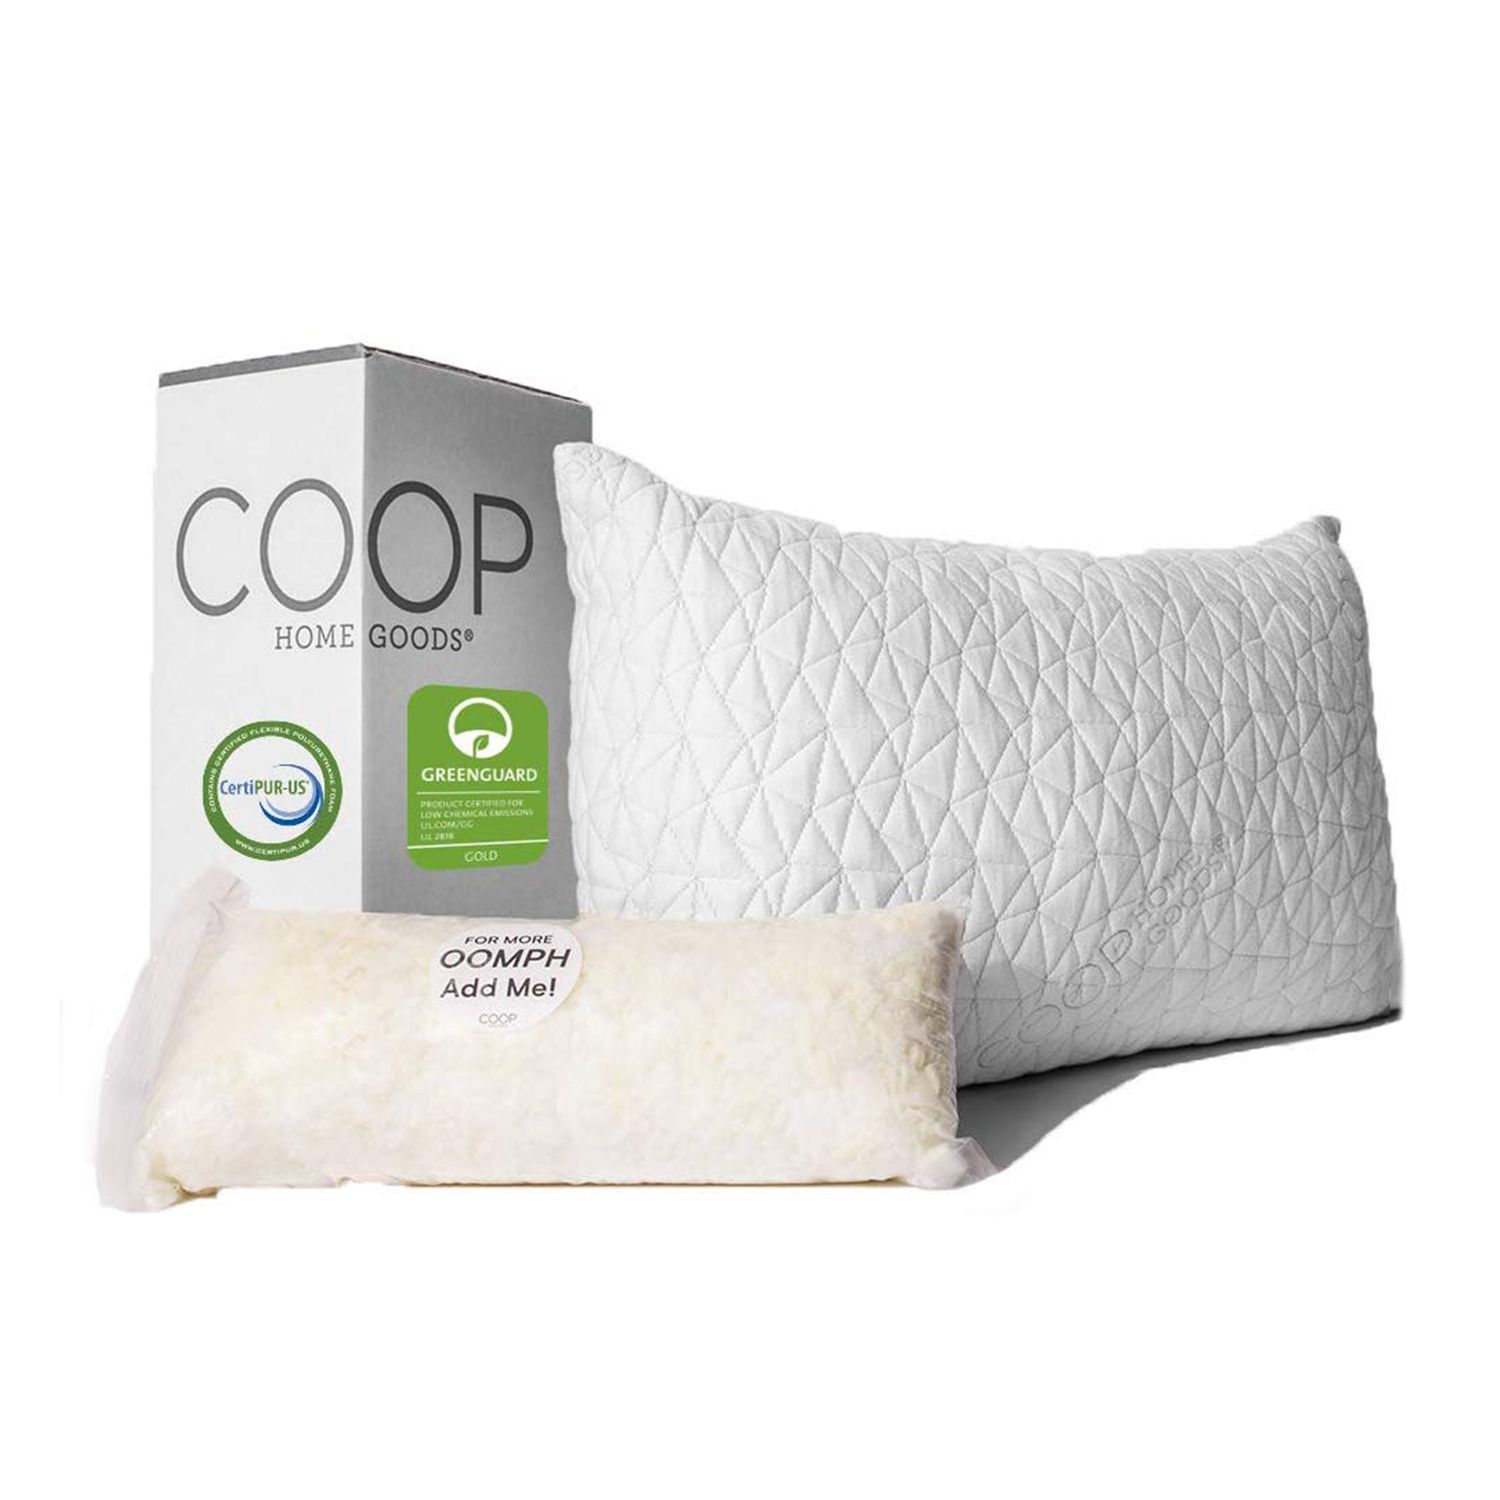 Coop Home Goods Premium verstellbares Loftkissen